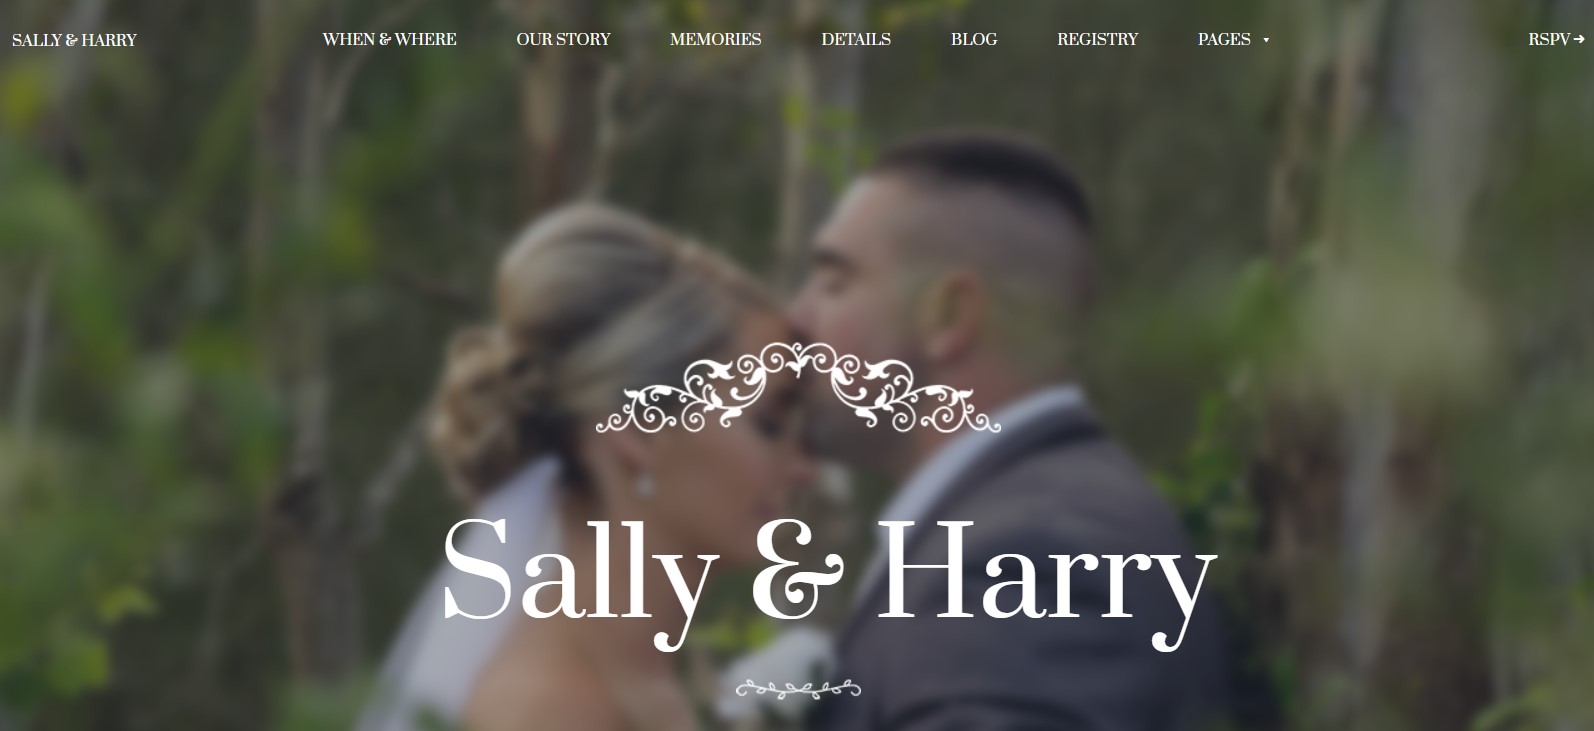 GK Wedding homepage  settings